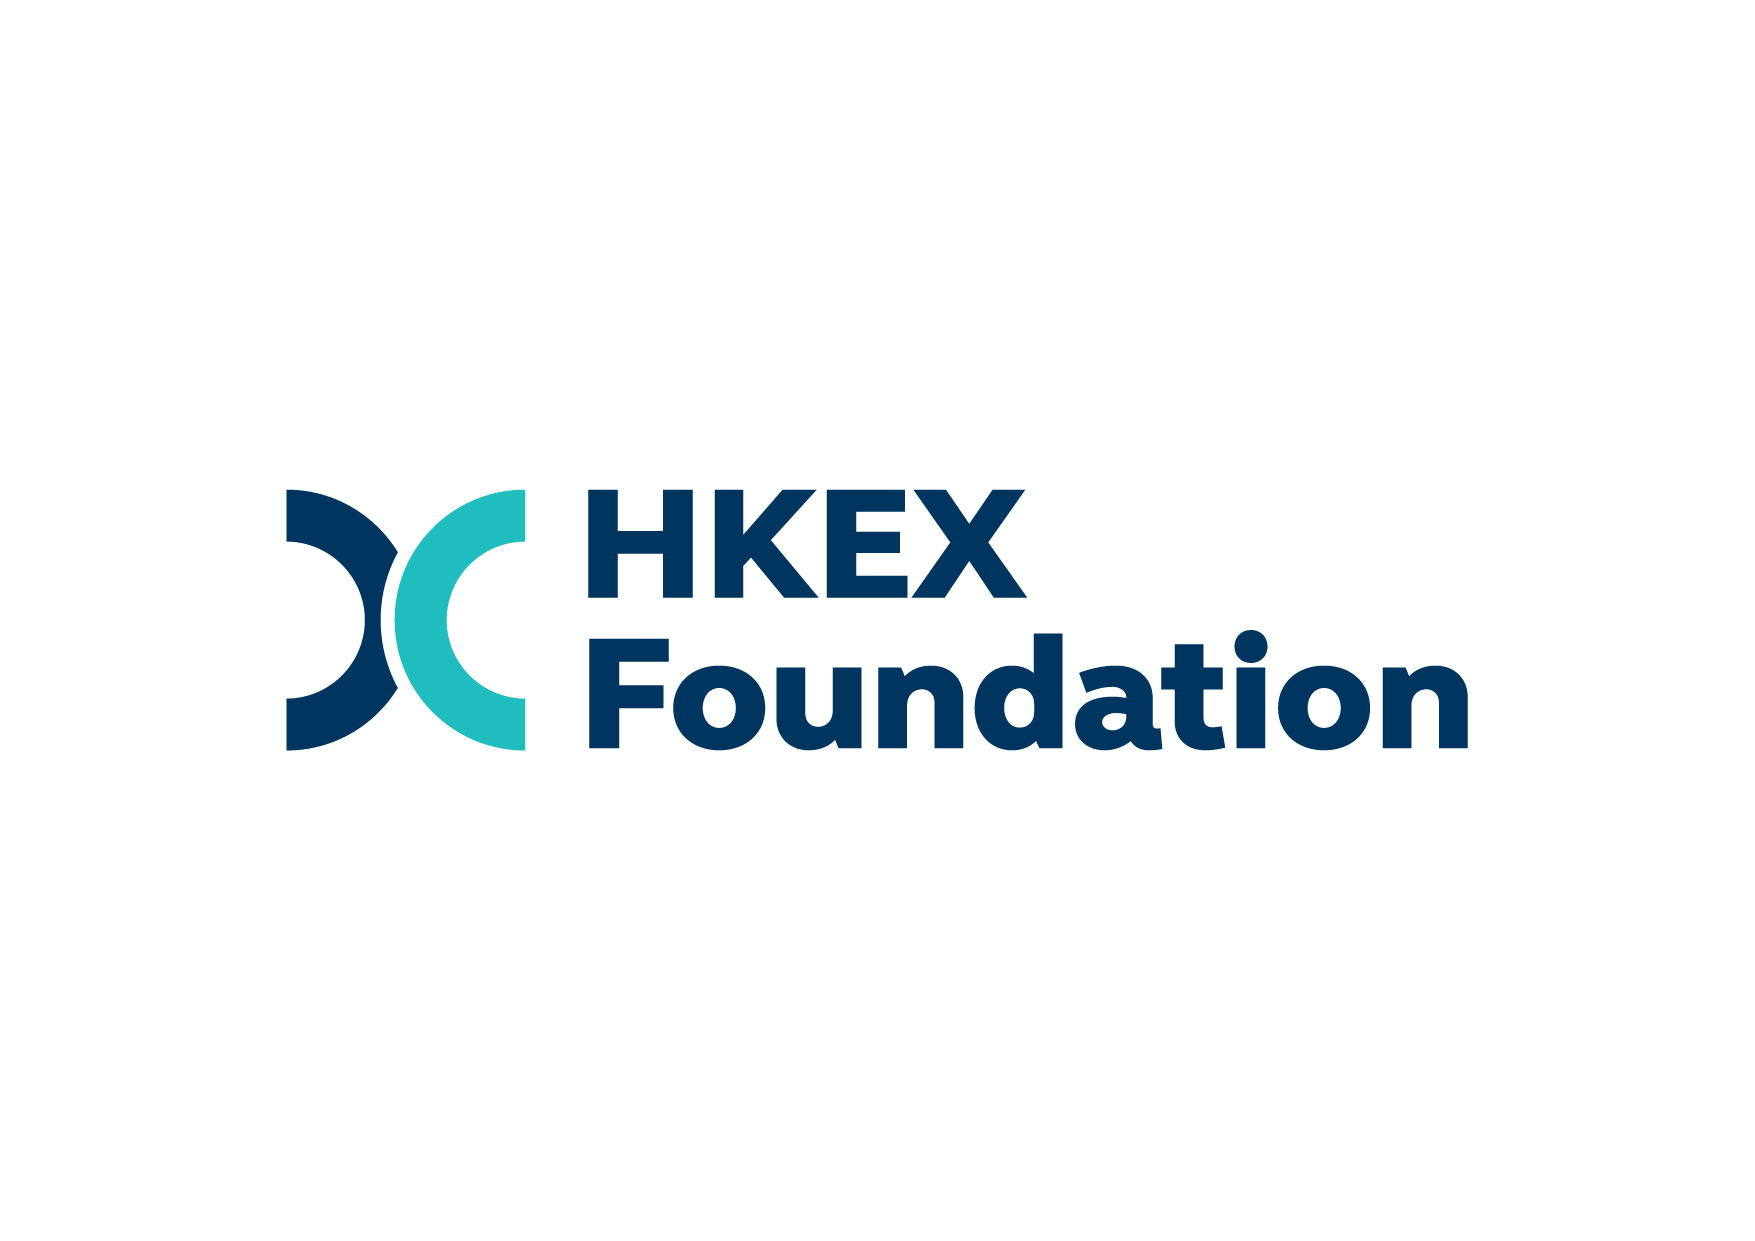 HKEX Foundation